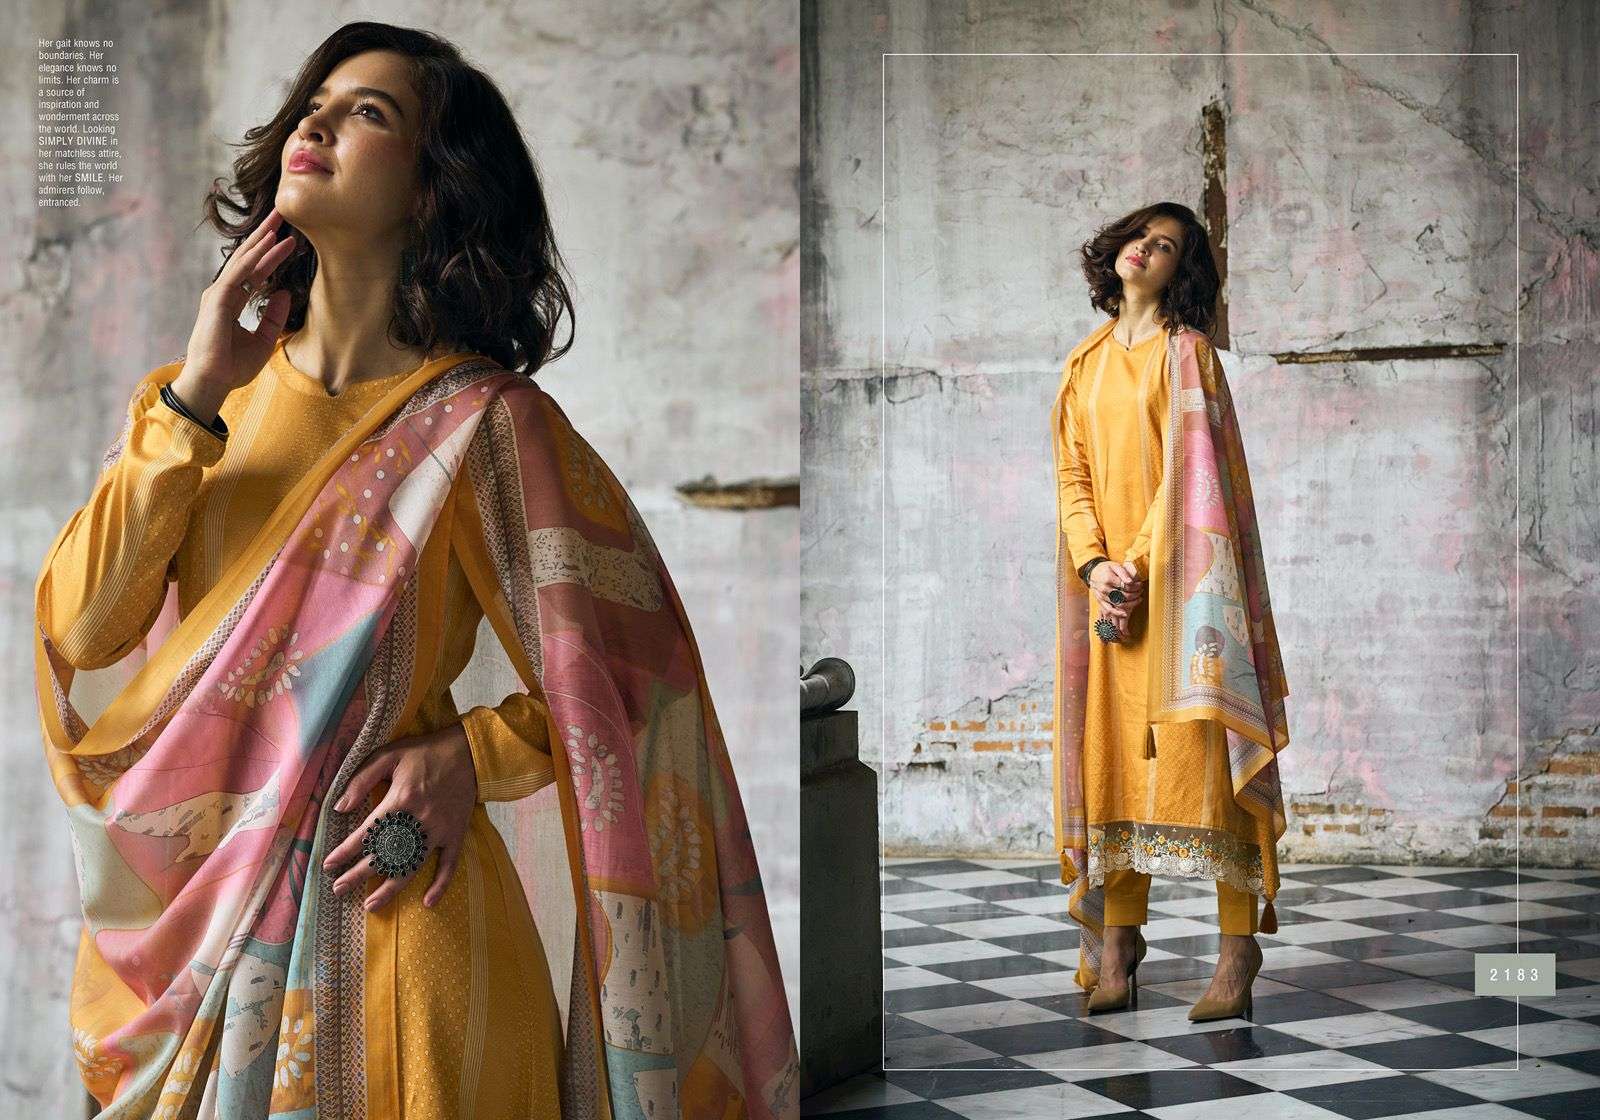 sadhana fashion sufiyana 2176-2185 series trendy designer top bottom with dupatta new catalogue surat 